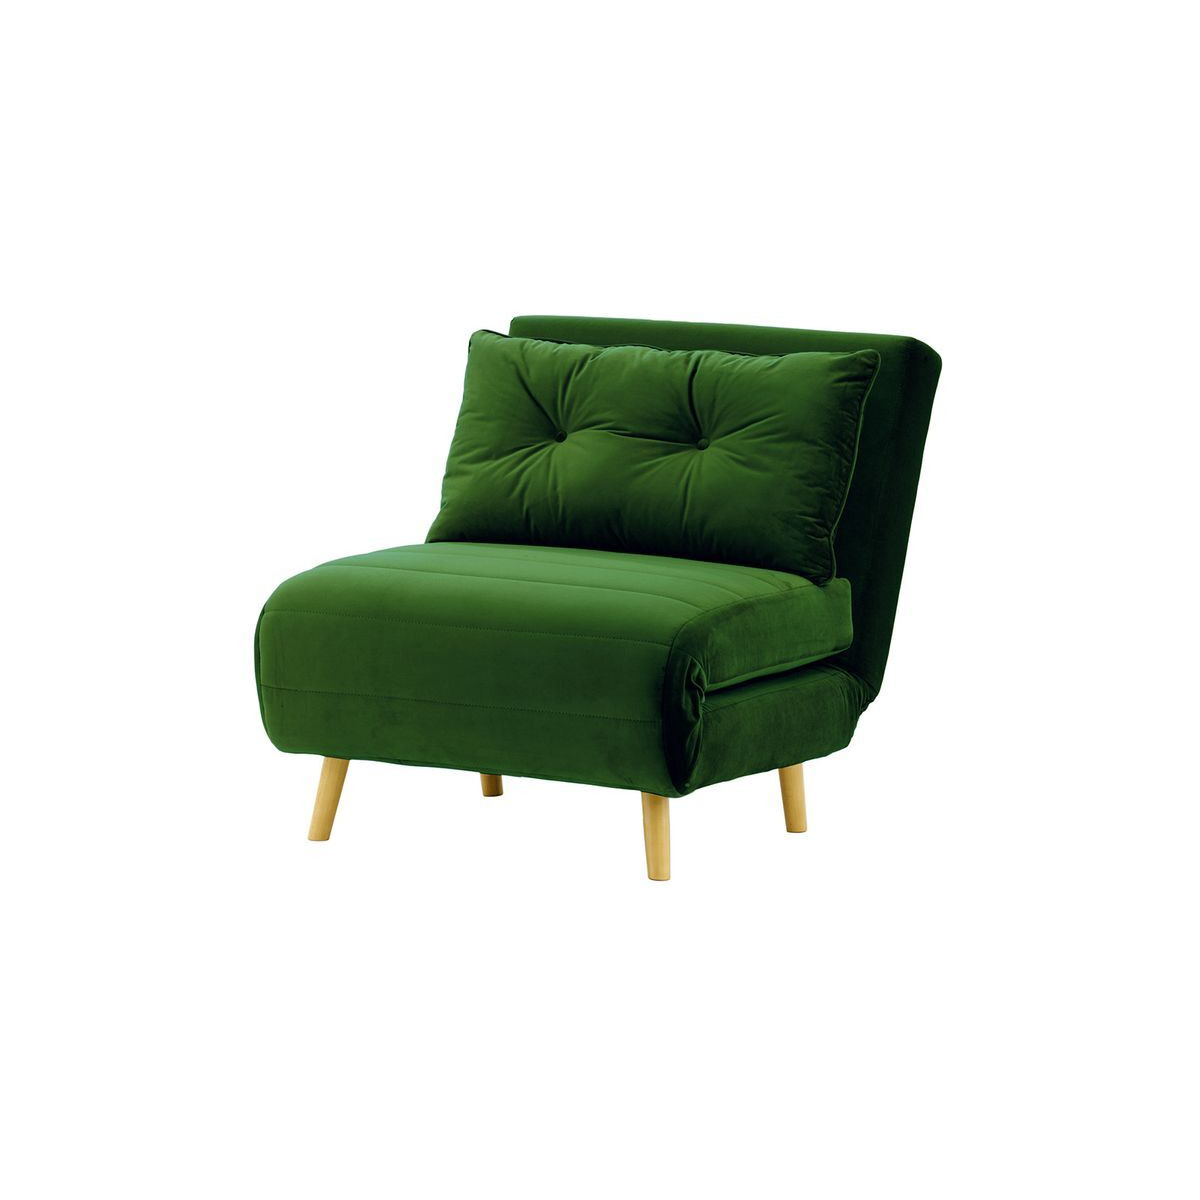 Flic Single Sofa Bed Chair - width 77 cm, navy blue, Leg colour: black - image 1